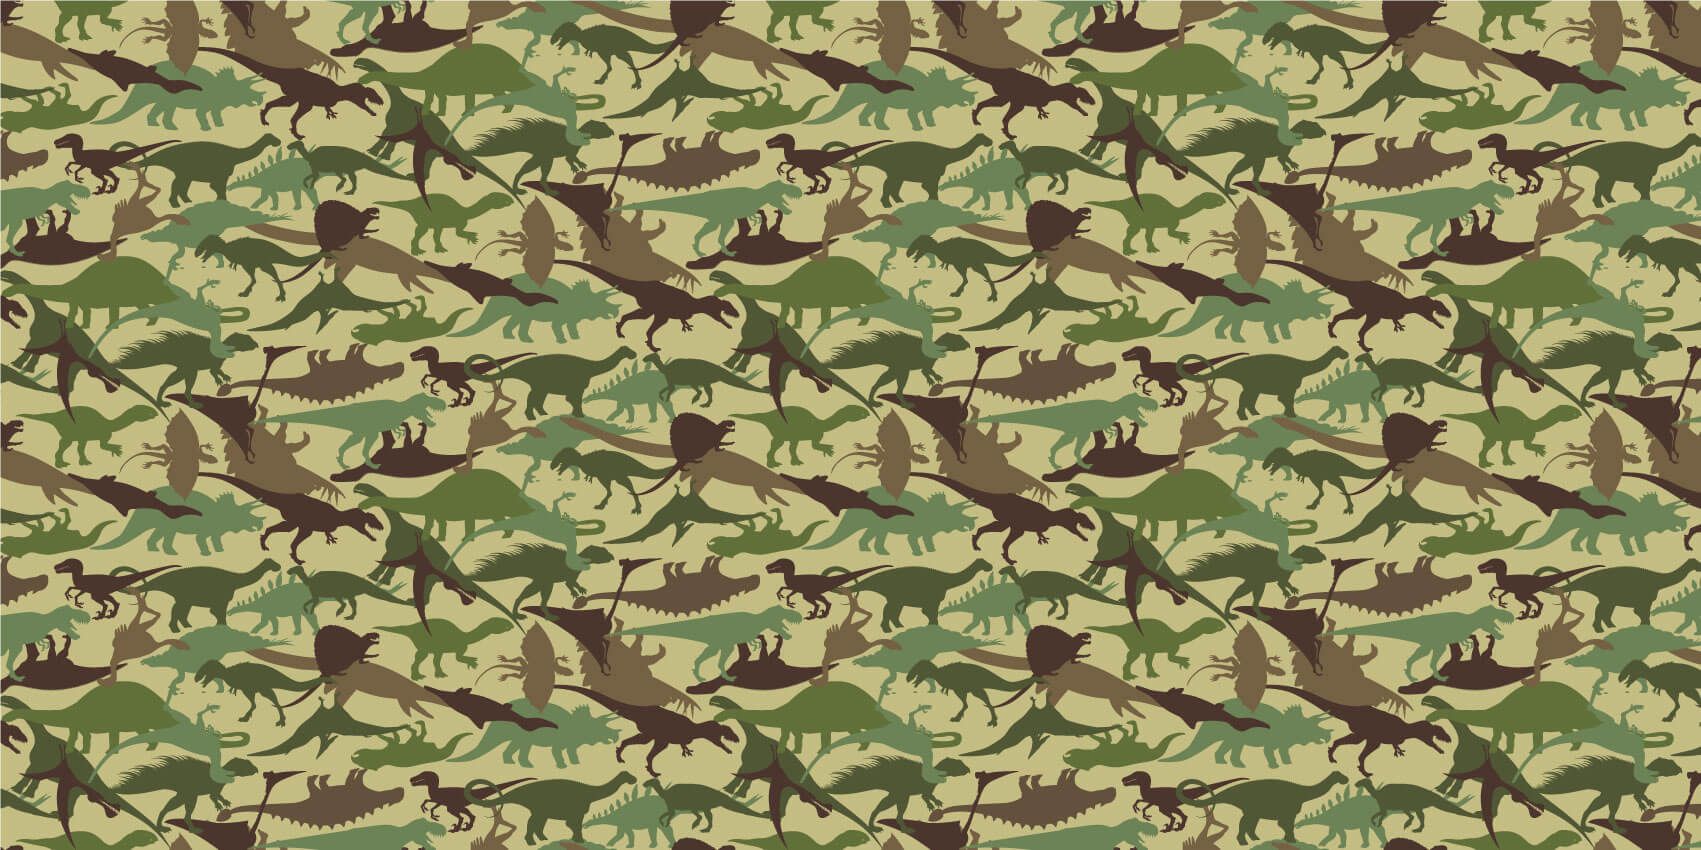 Dinosaurs - Dino camouflage  - Children's room